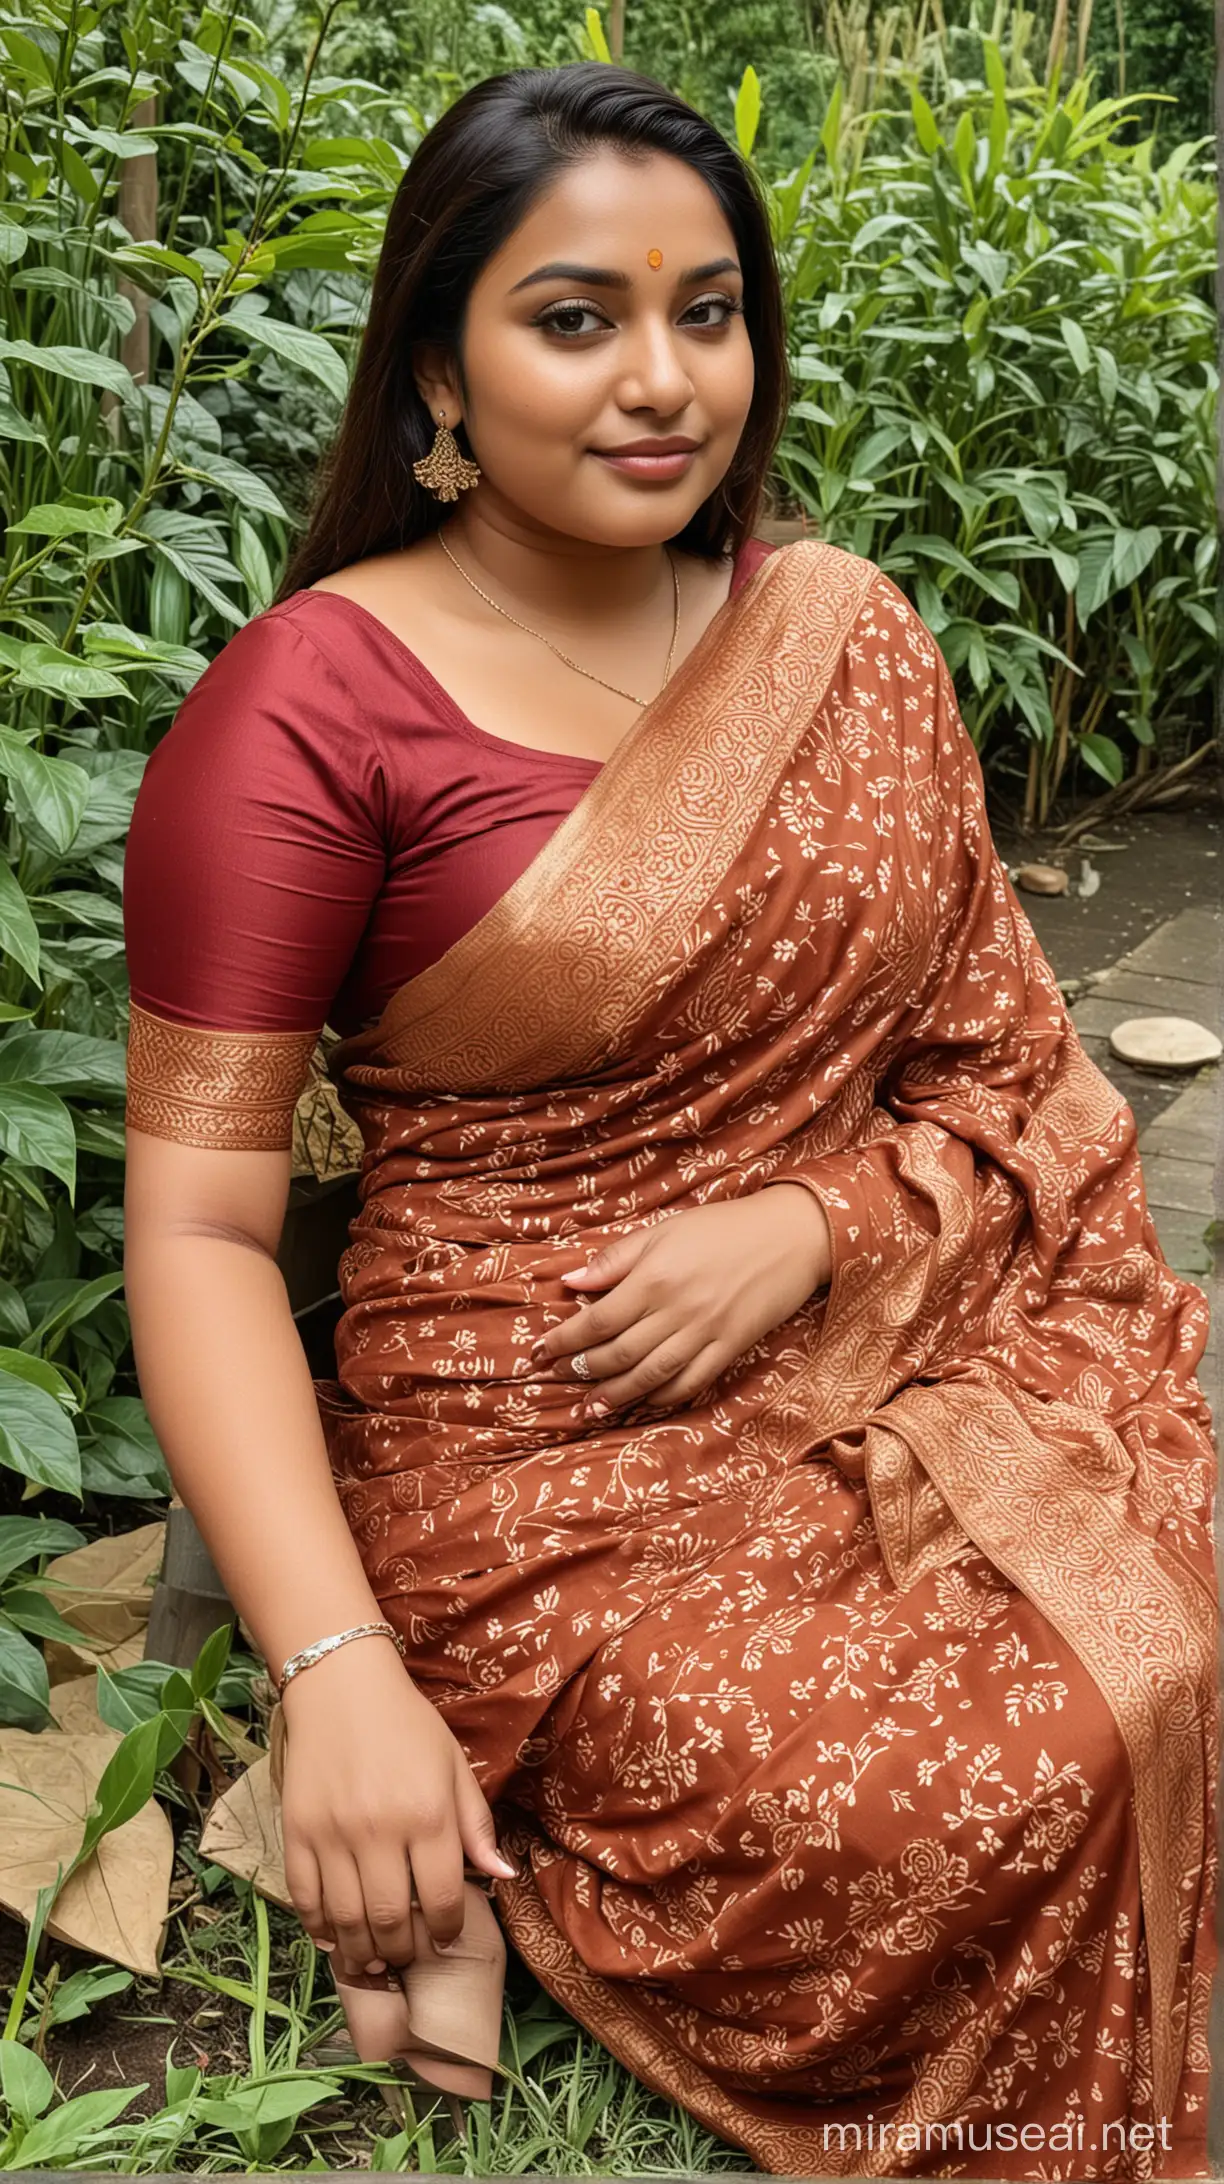 Prompt

Image of the Bangladeshi beautiful plus size dark brown skin woman wearing Bangladeshi saree and sitting in the garden

